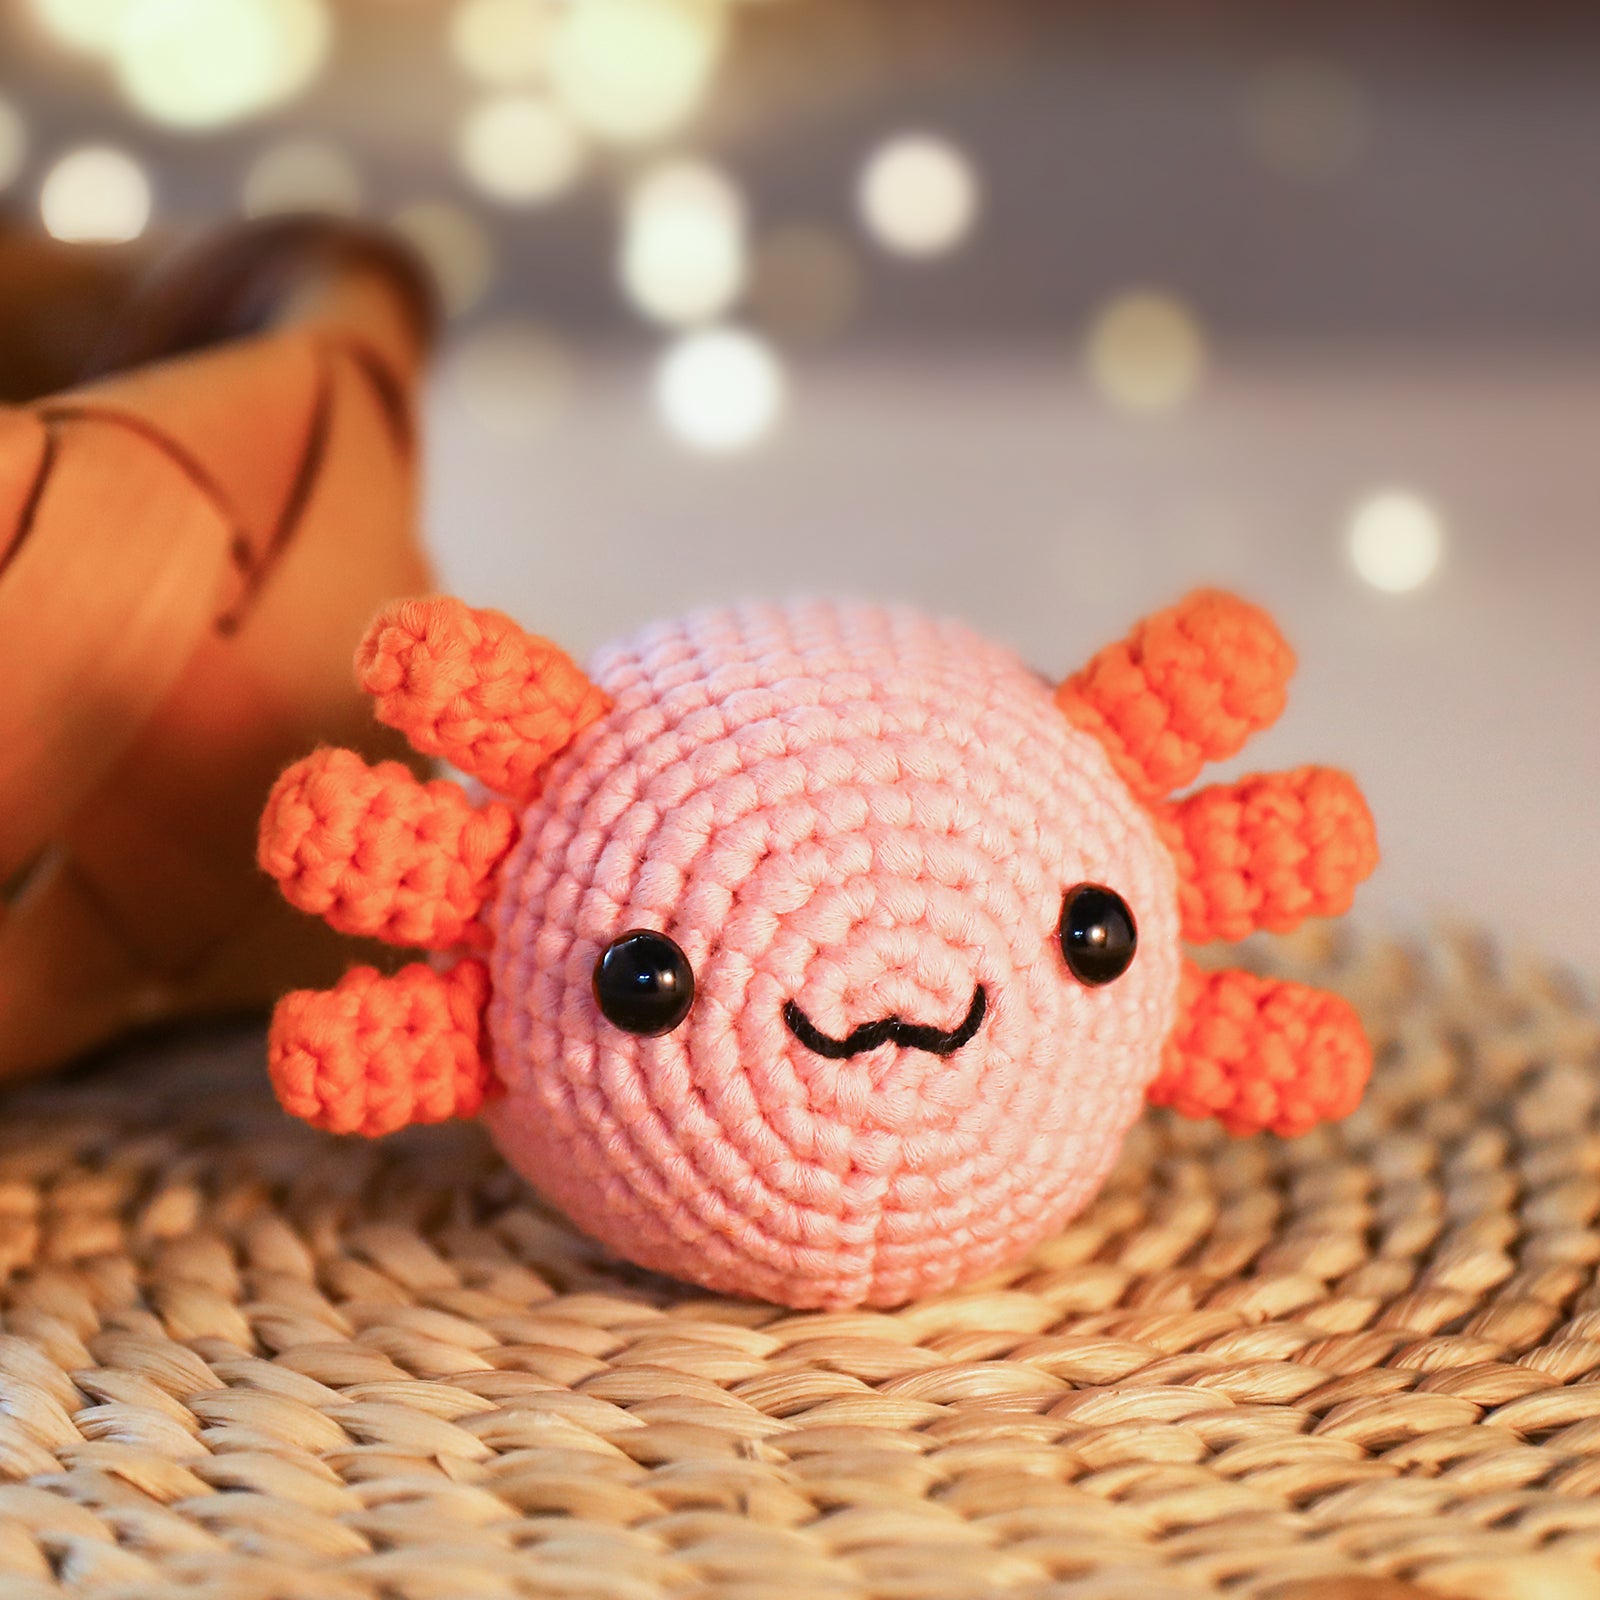 Mewaii Crochet Axolotl Kits For Beginners Crochet Set Animals DIY